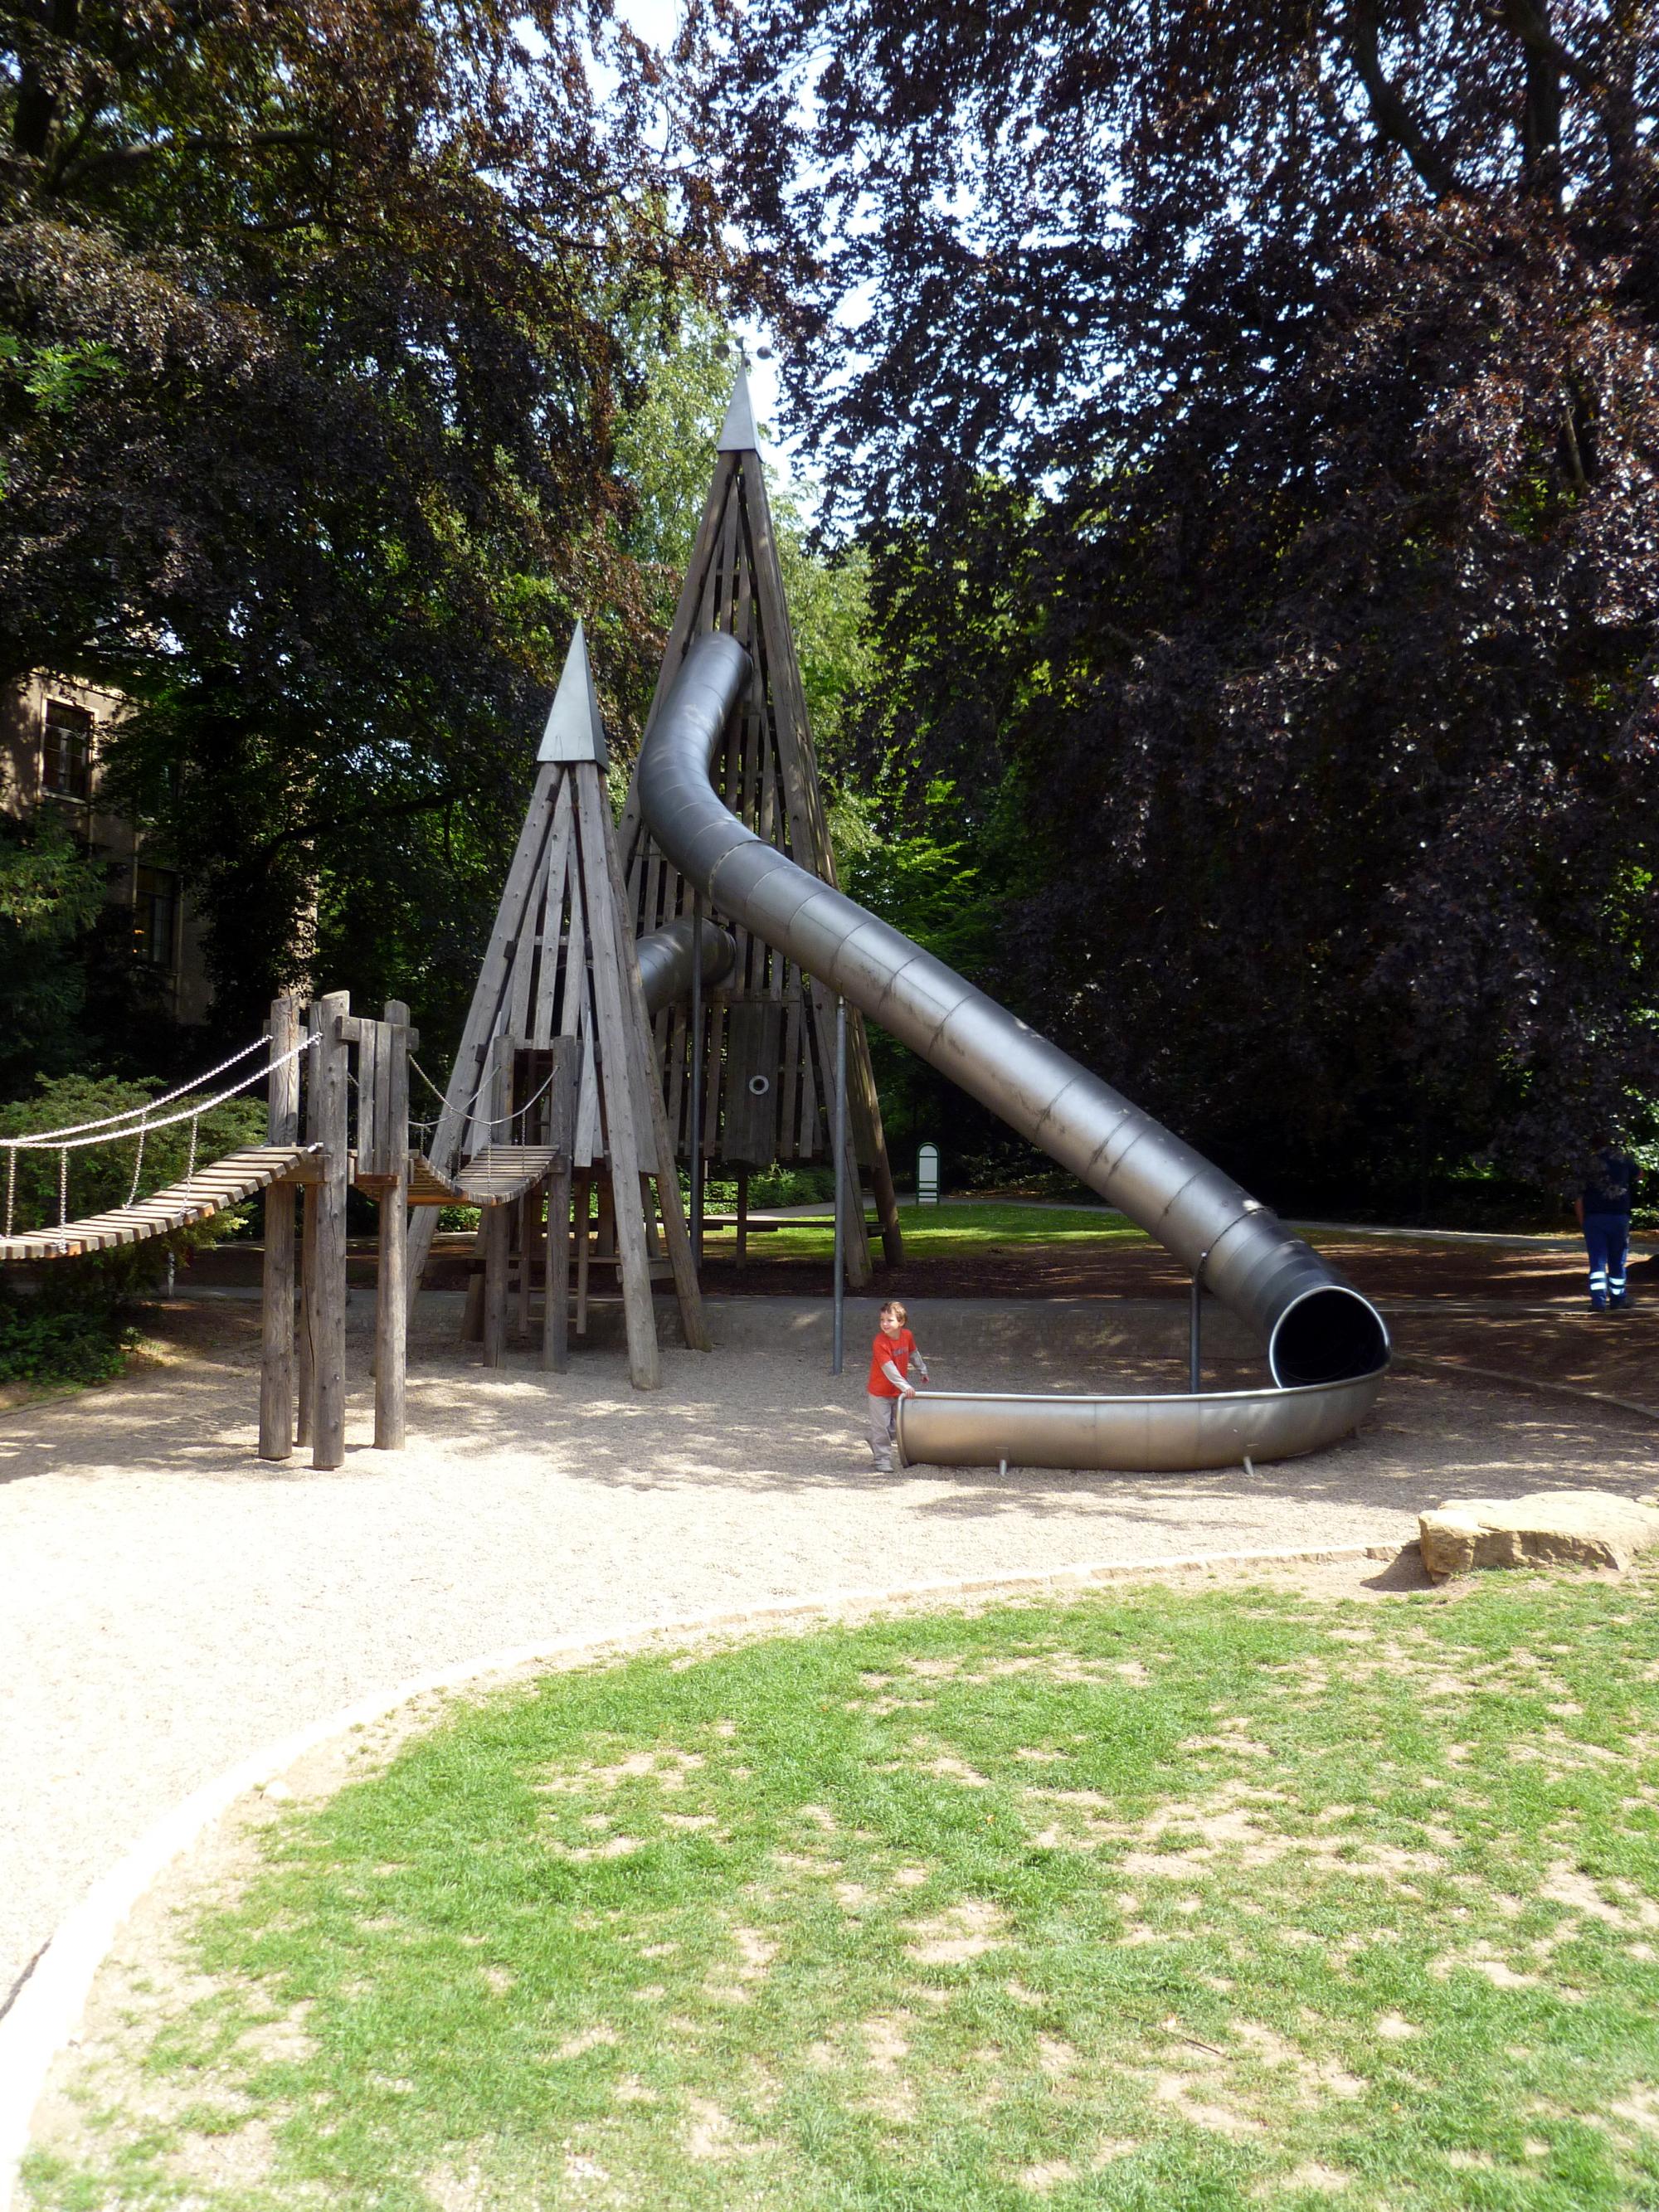 Luxembourg - City Playground Slide